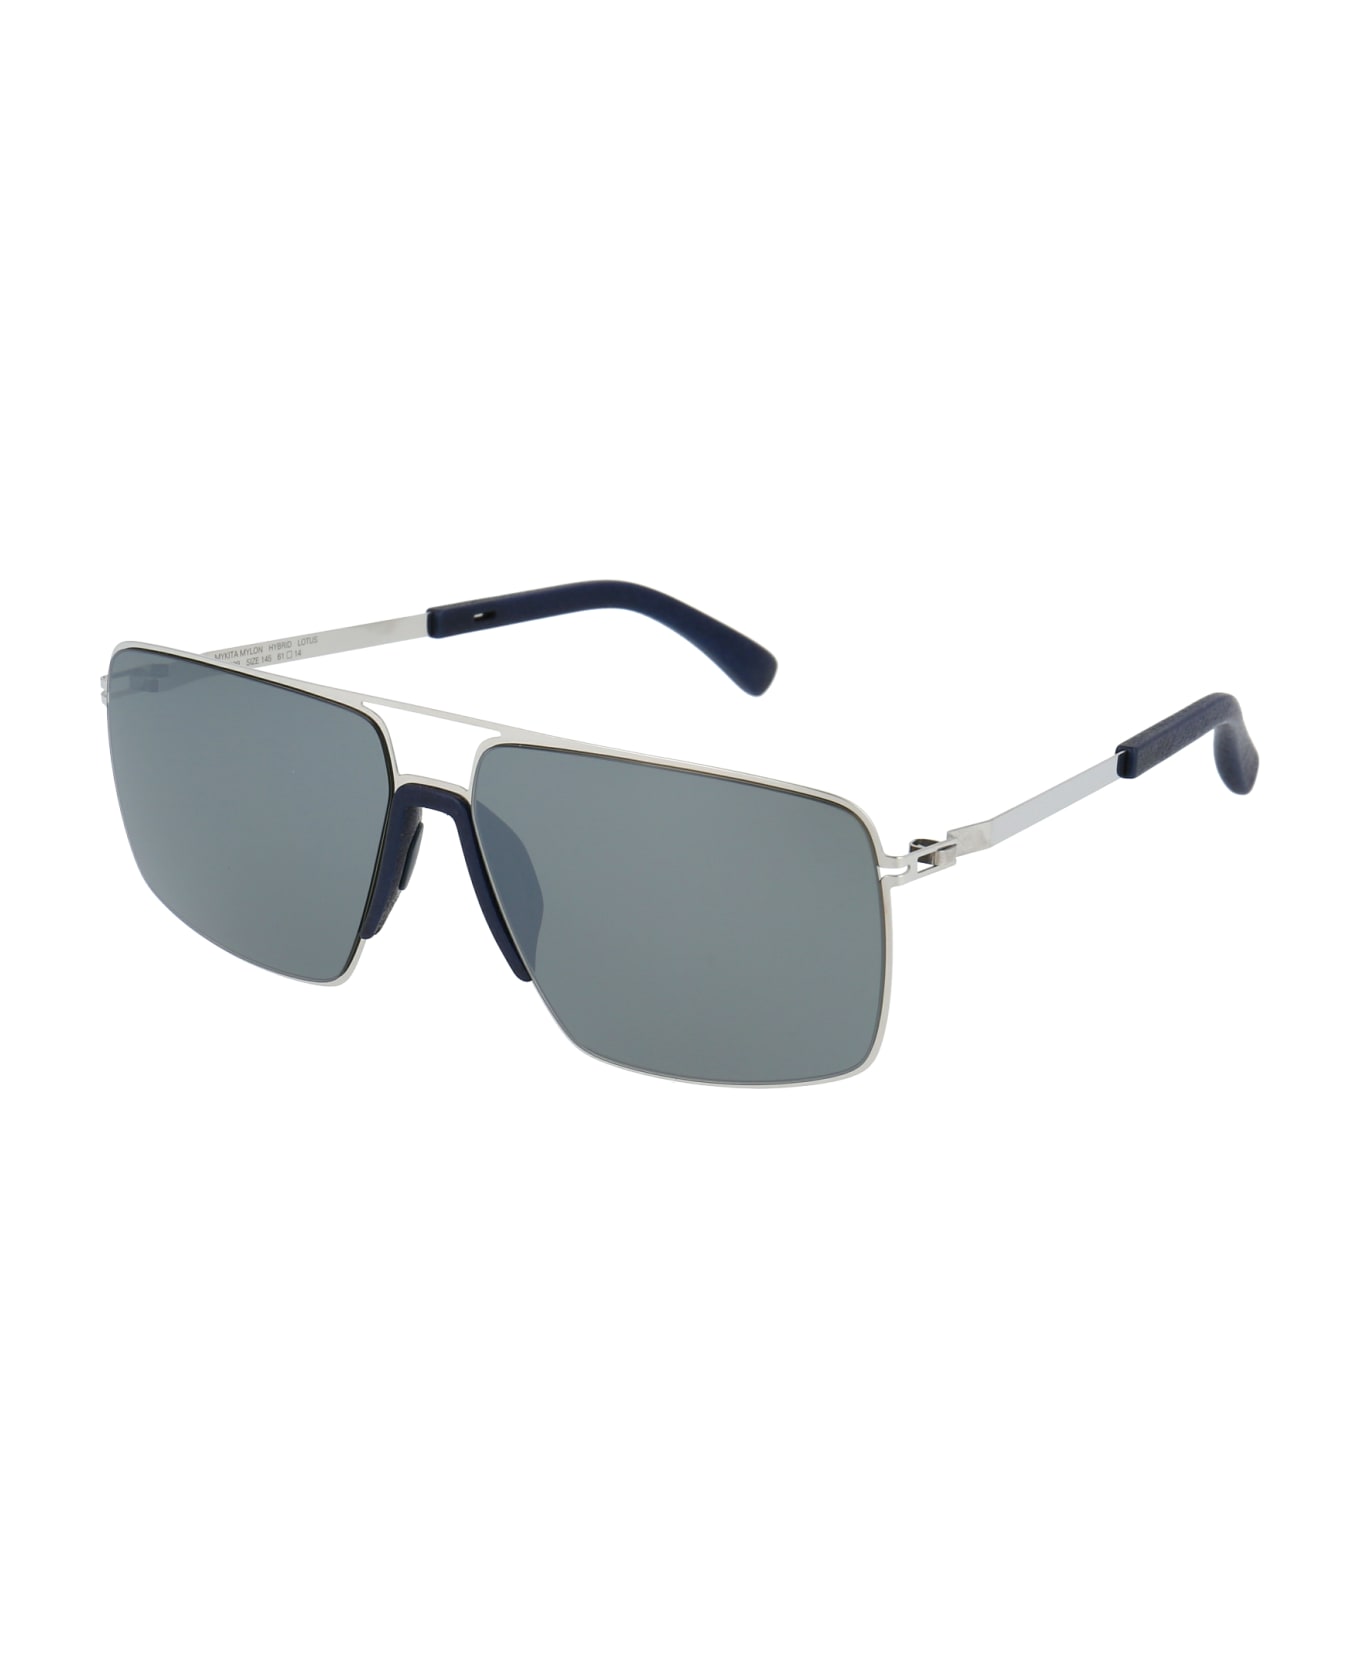 Mykita Lotus Sunglasses - 309 MH10 Navy Blue/Shiny Silver Light Silver Flash